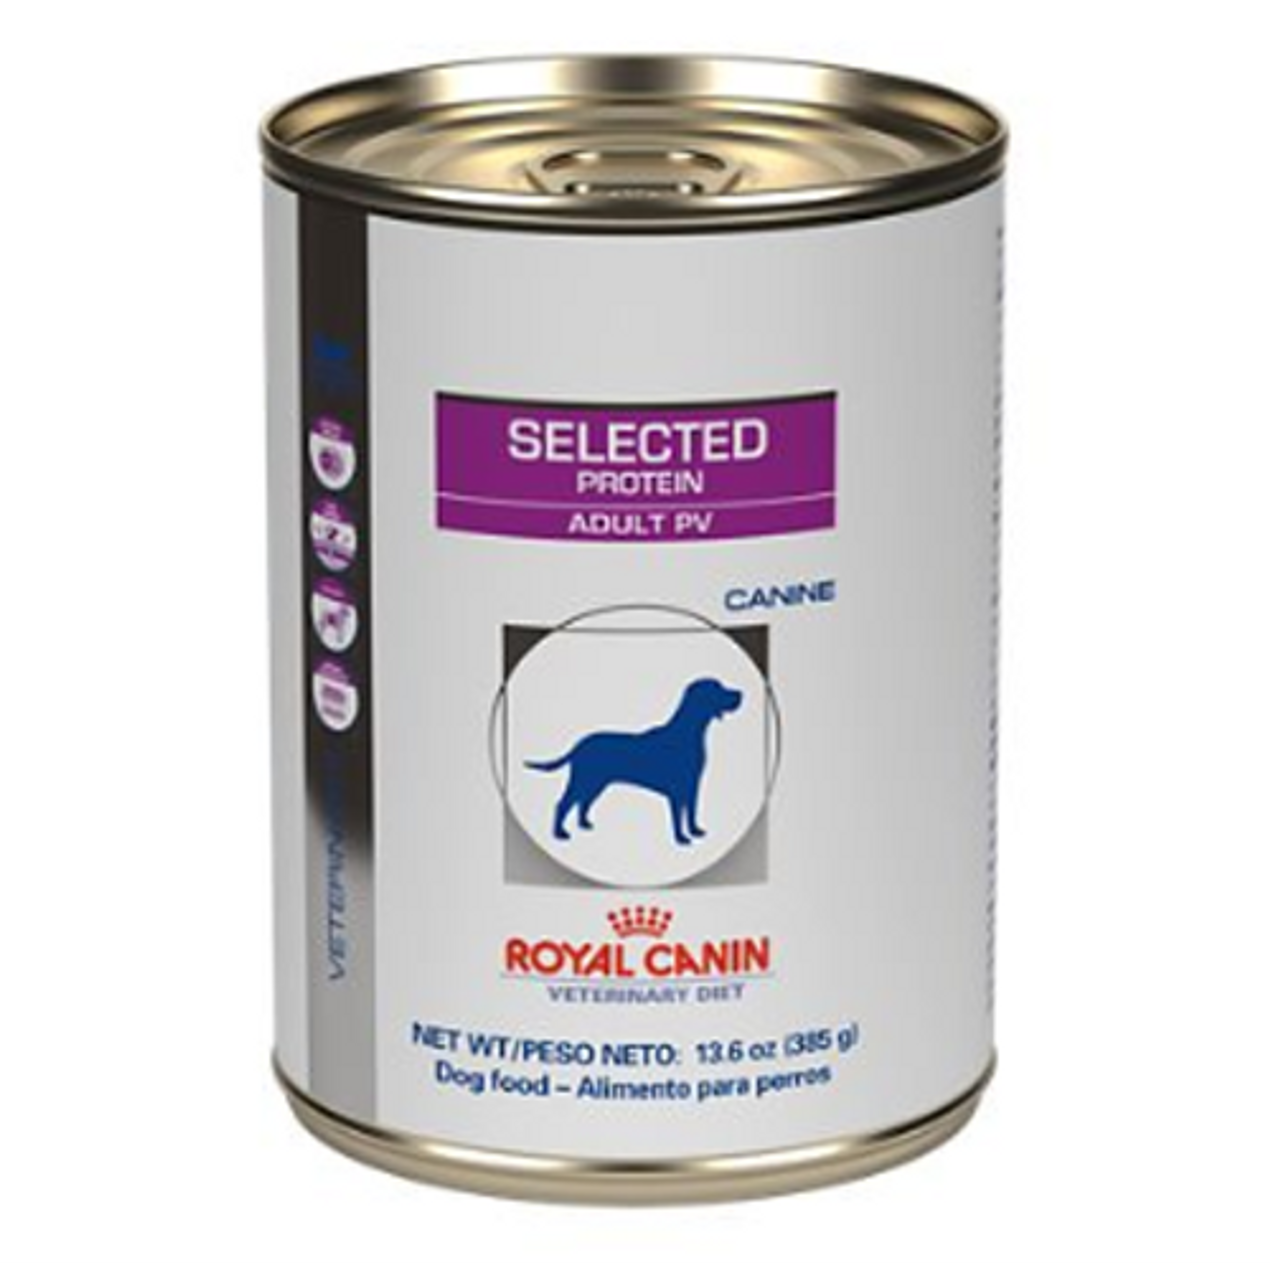 royal canin venison cat food